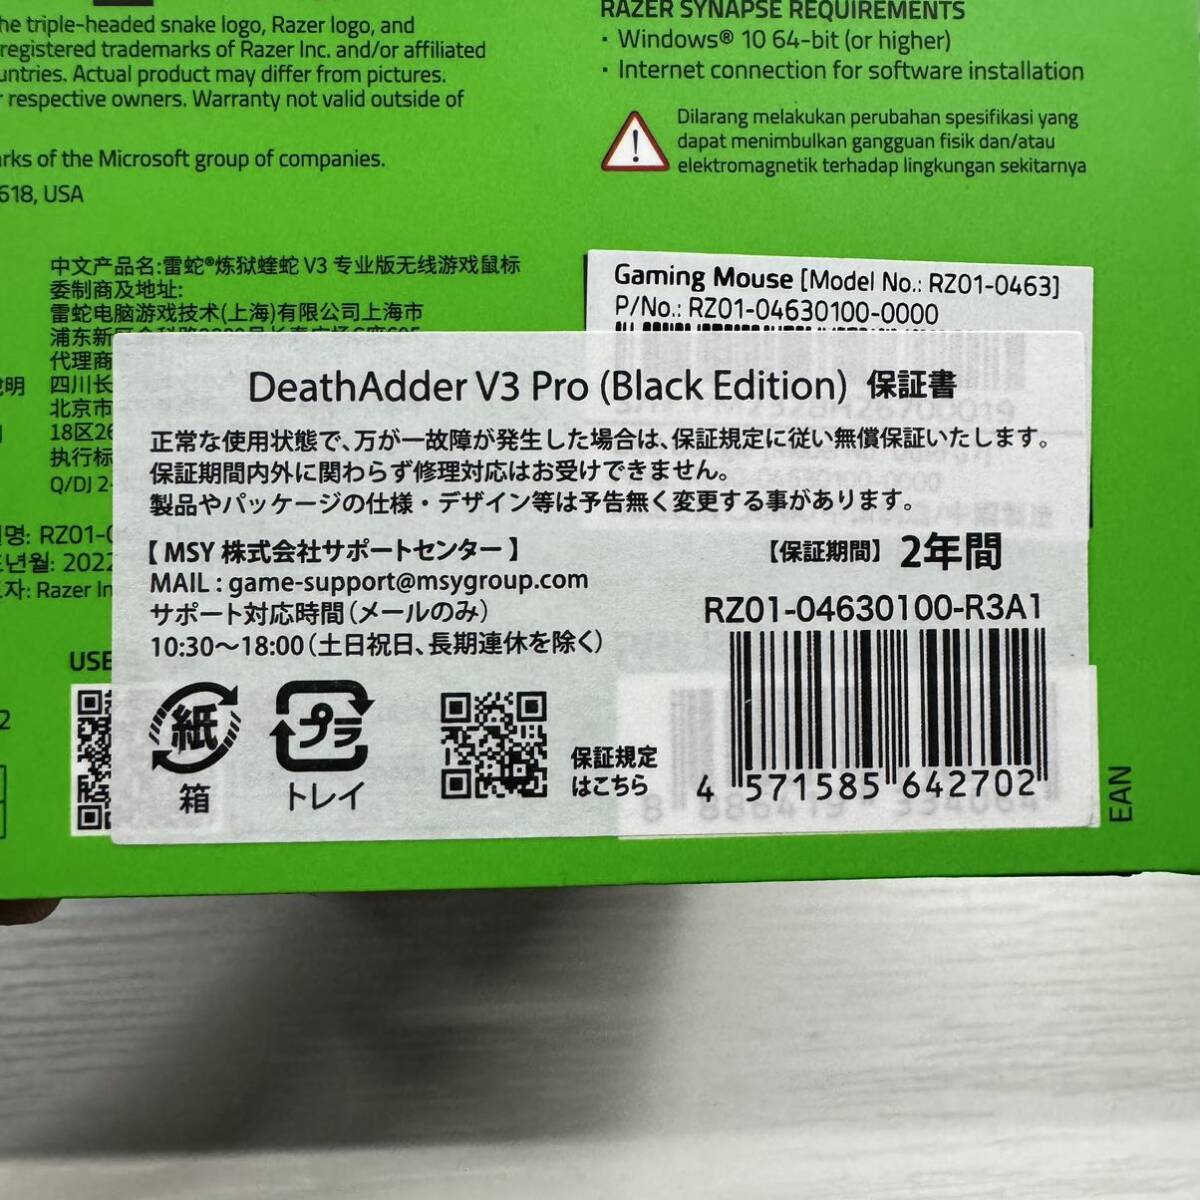 Razer レイザー DeathAdder V3 Pro ゲーミングマウス ワイヤレス 無線 63gの超軽量 進化したエルゴノミック形状 最高クラスFocus Pro 30K_画像3